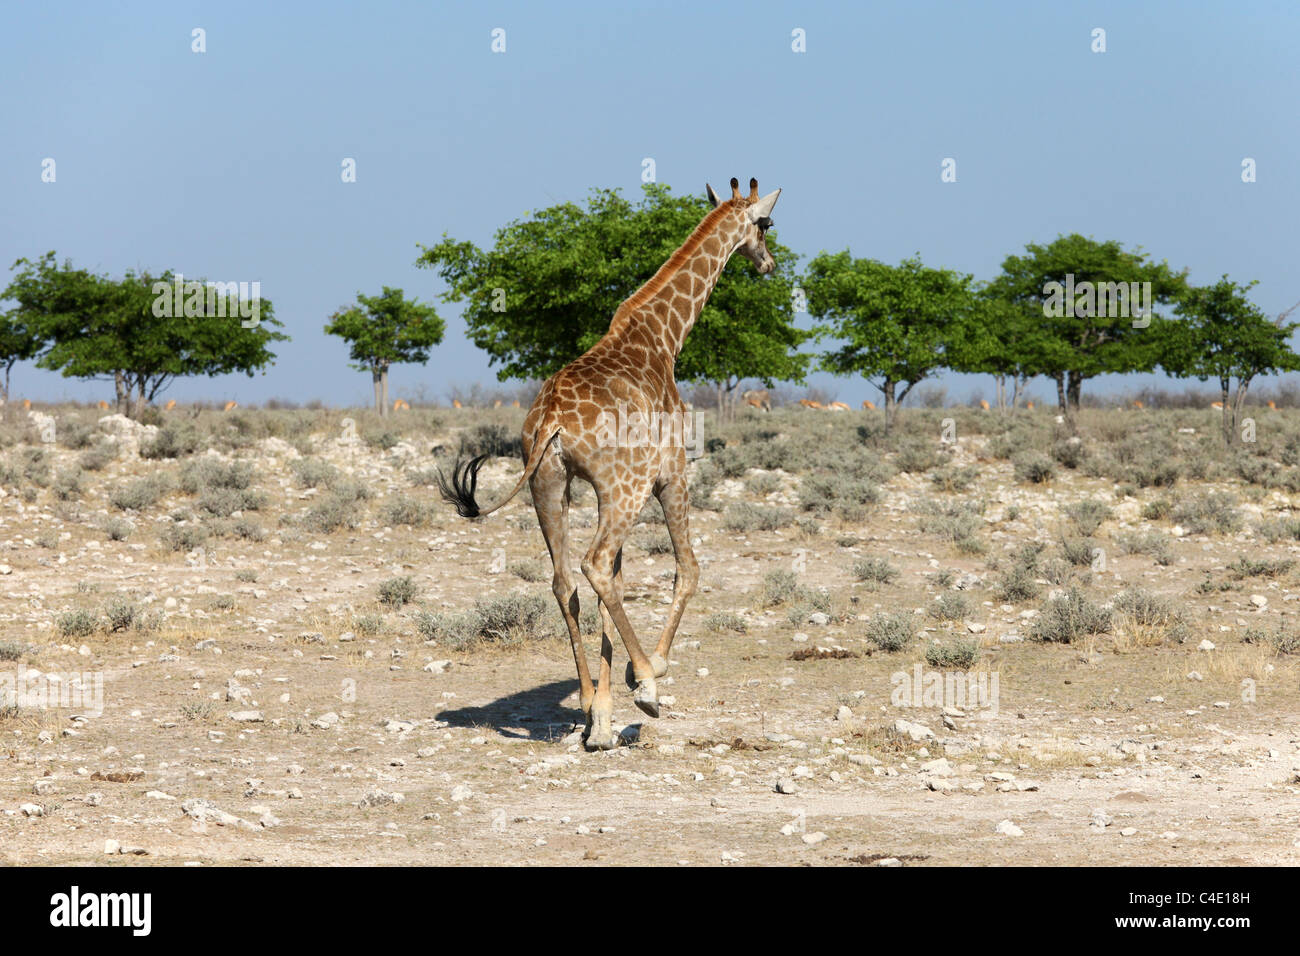 Girafe angolais( Giraffa camelopardalis angolensis) s'exécutant dans le parc national d'Etosha, Namibie. Banque D'Images